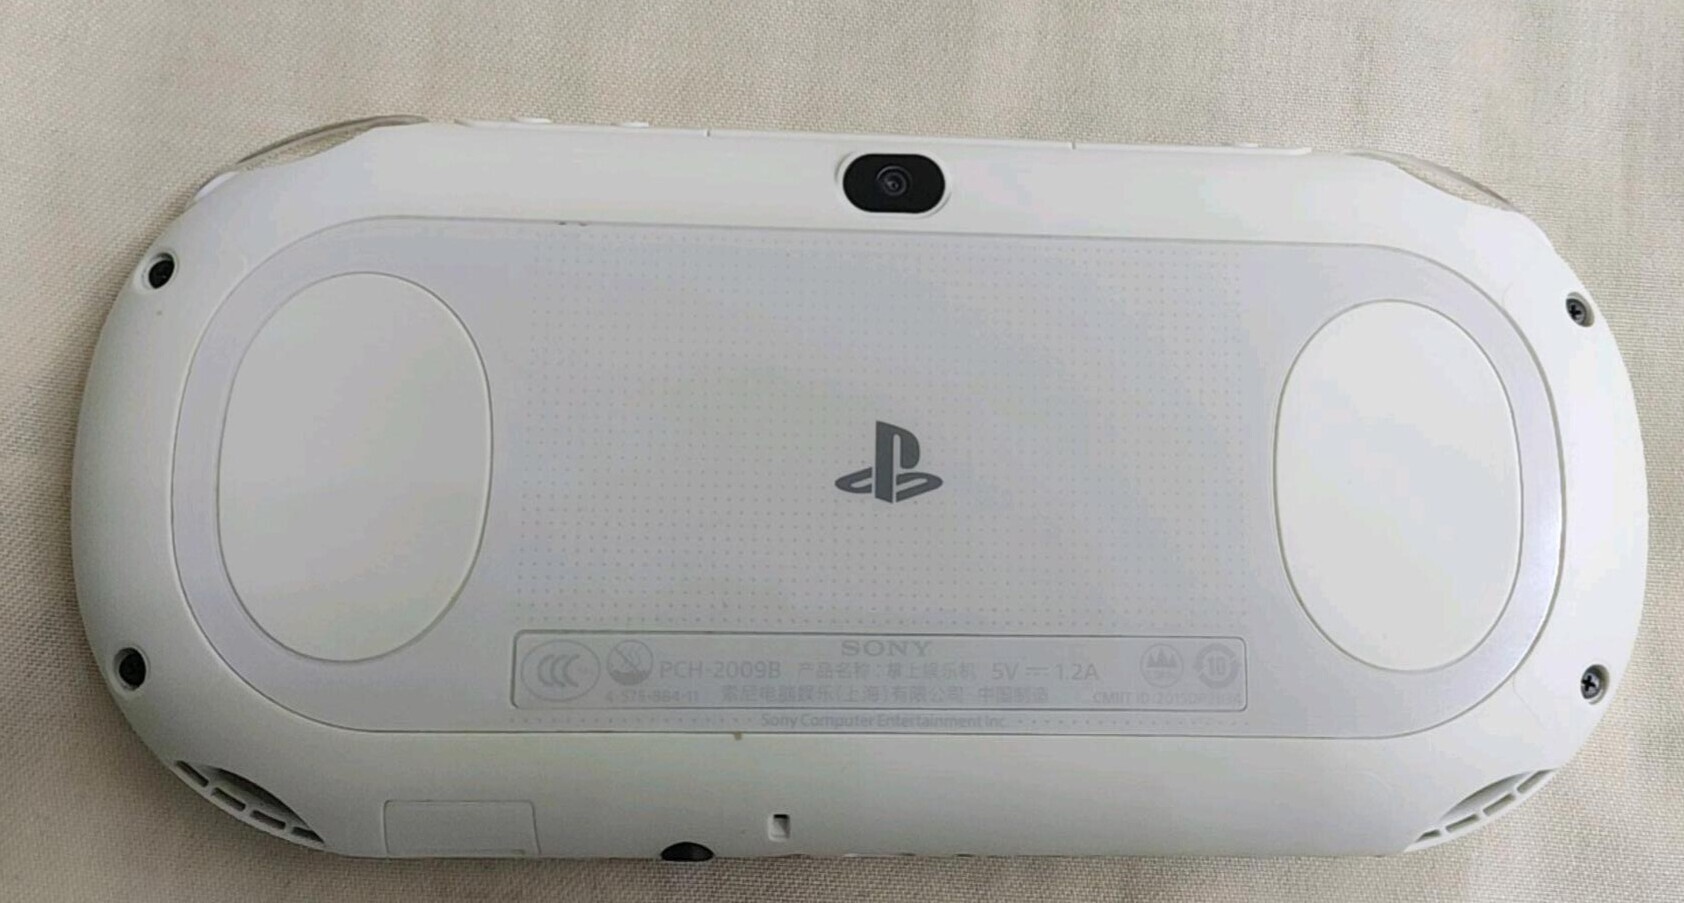 Sony PS Vita slim PCH-2009B Console [CN]